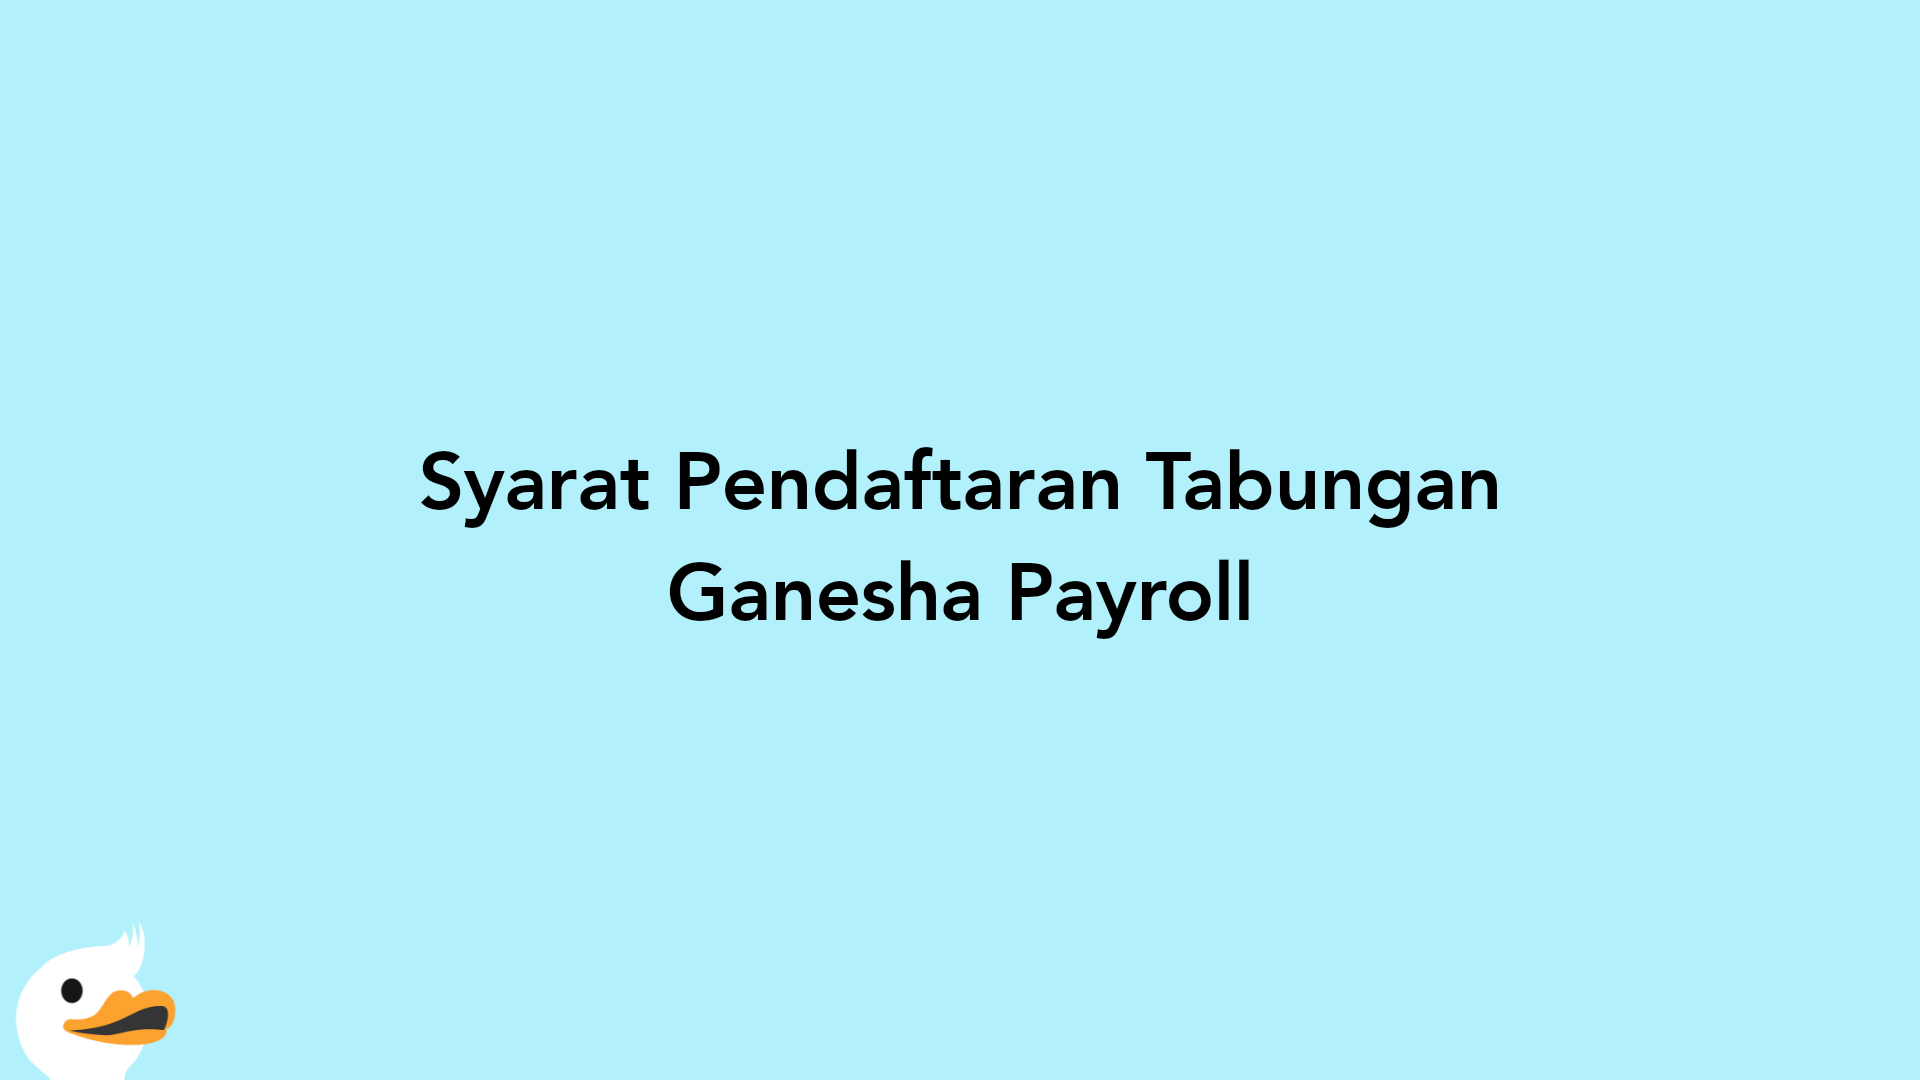 Syarat Pendaftaran Tabungan Ganesha Payroll